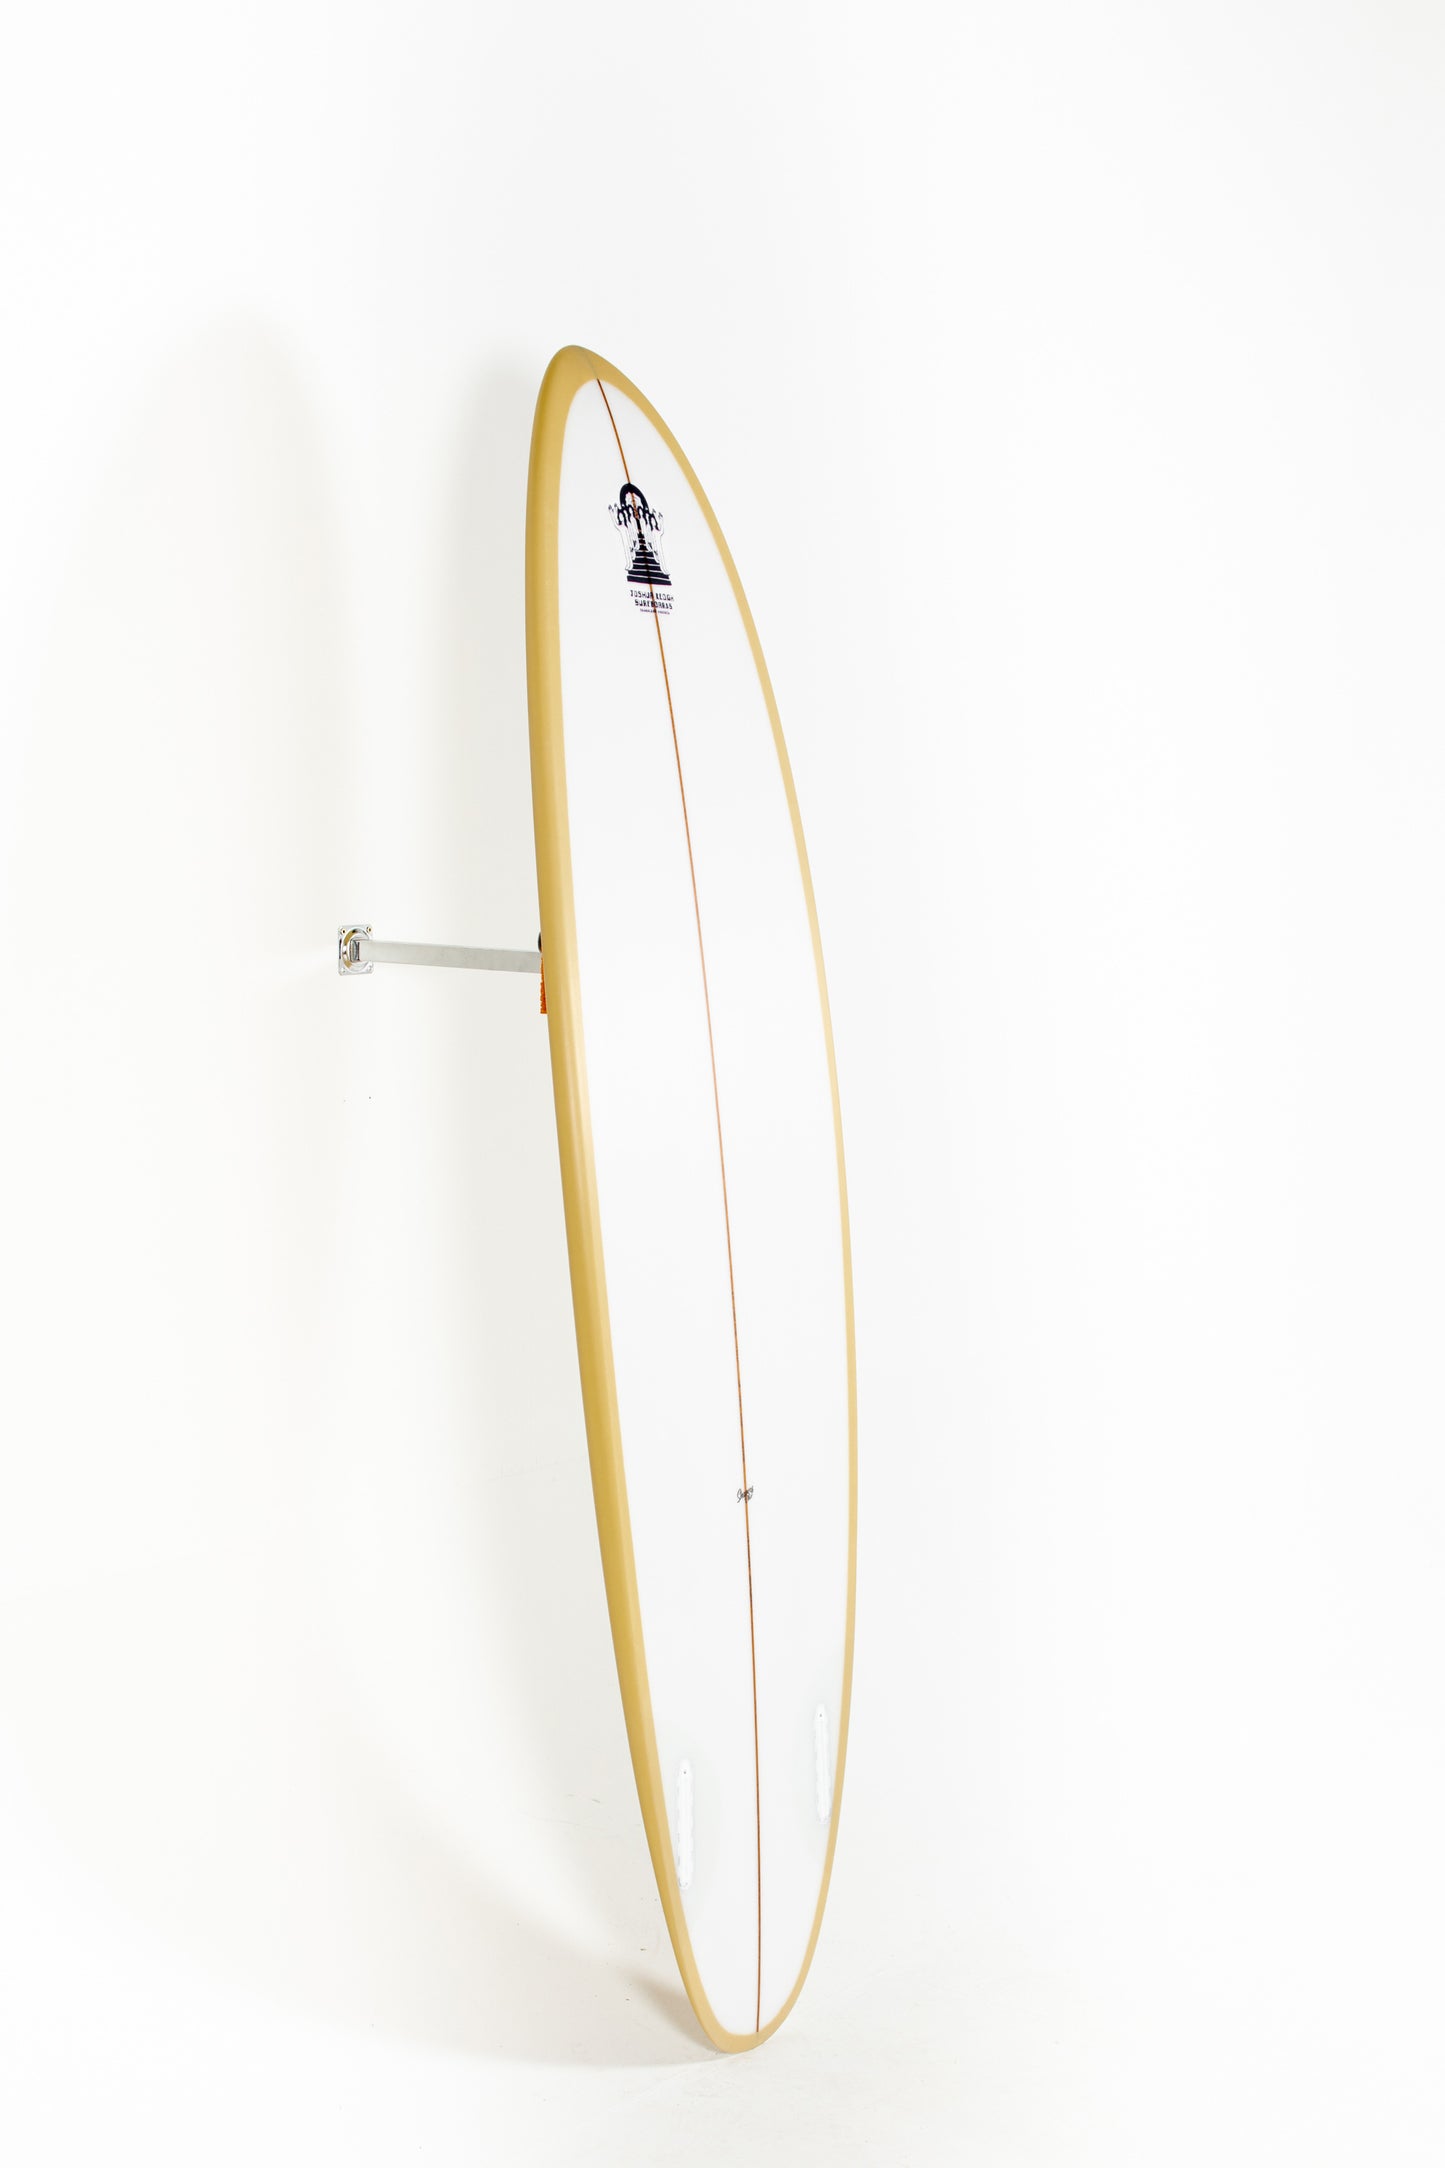 
                  
                    Pukas Surf Shop - Joshua Keogh Surfboard - LIBERATOR TWIN by Joshua Keogh - 6'6" x 21 x 2 1/2 - LIBERATOR66
                  
                